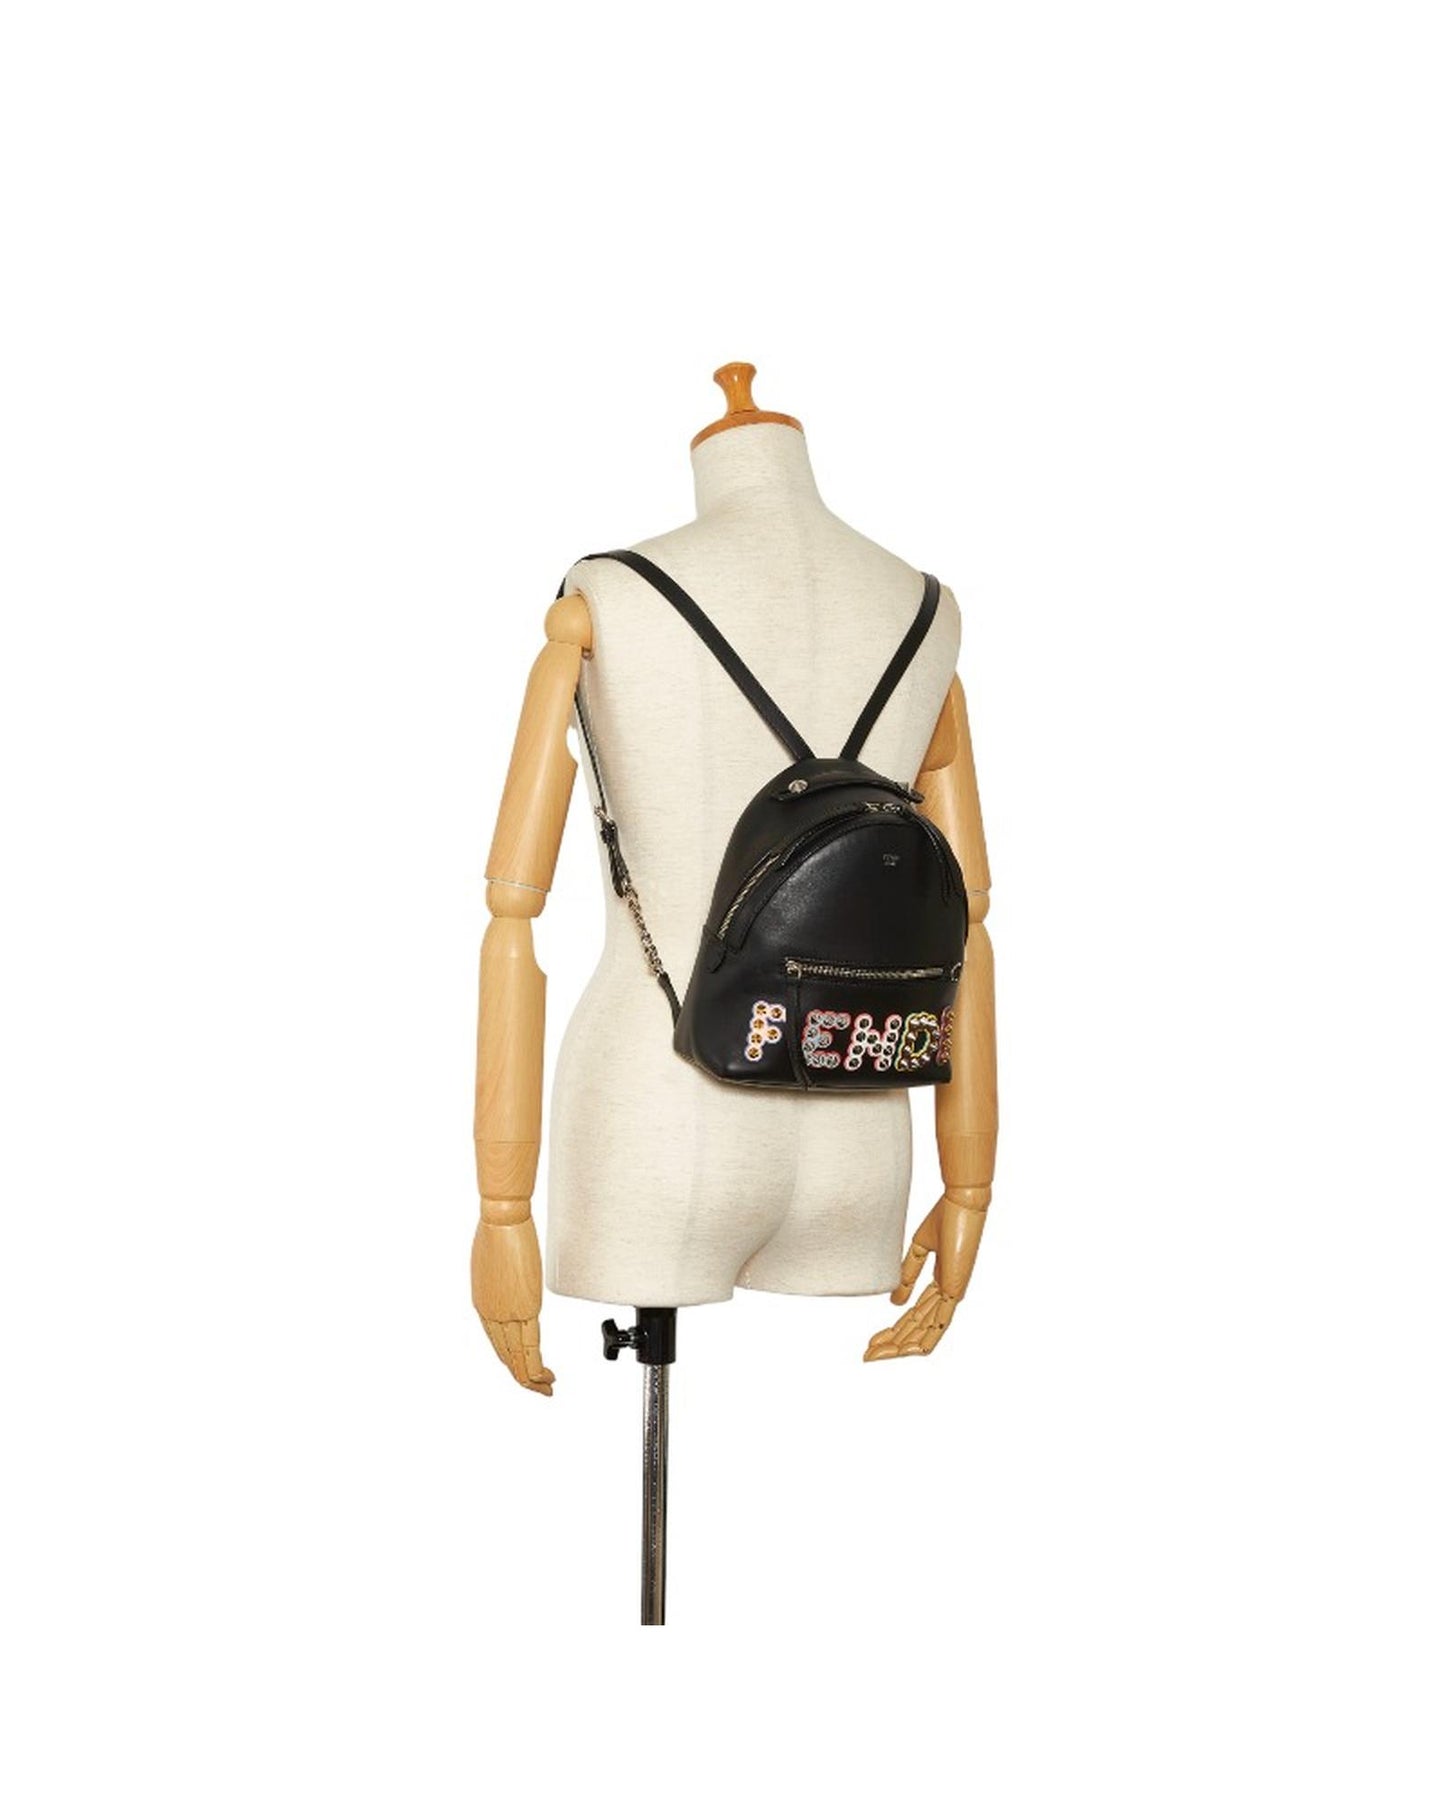 Fendi Women's Fun Fair Studded Mini Backpack Bag in Black